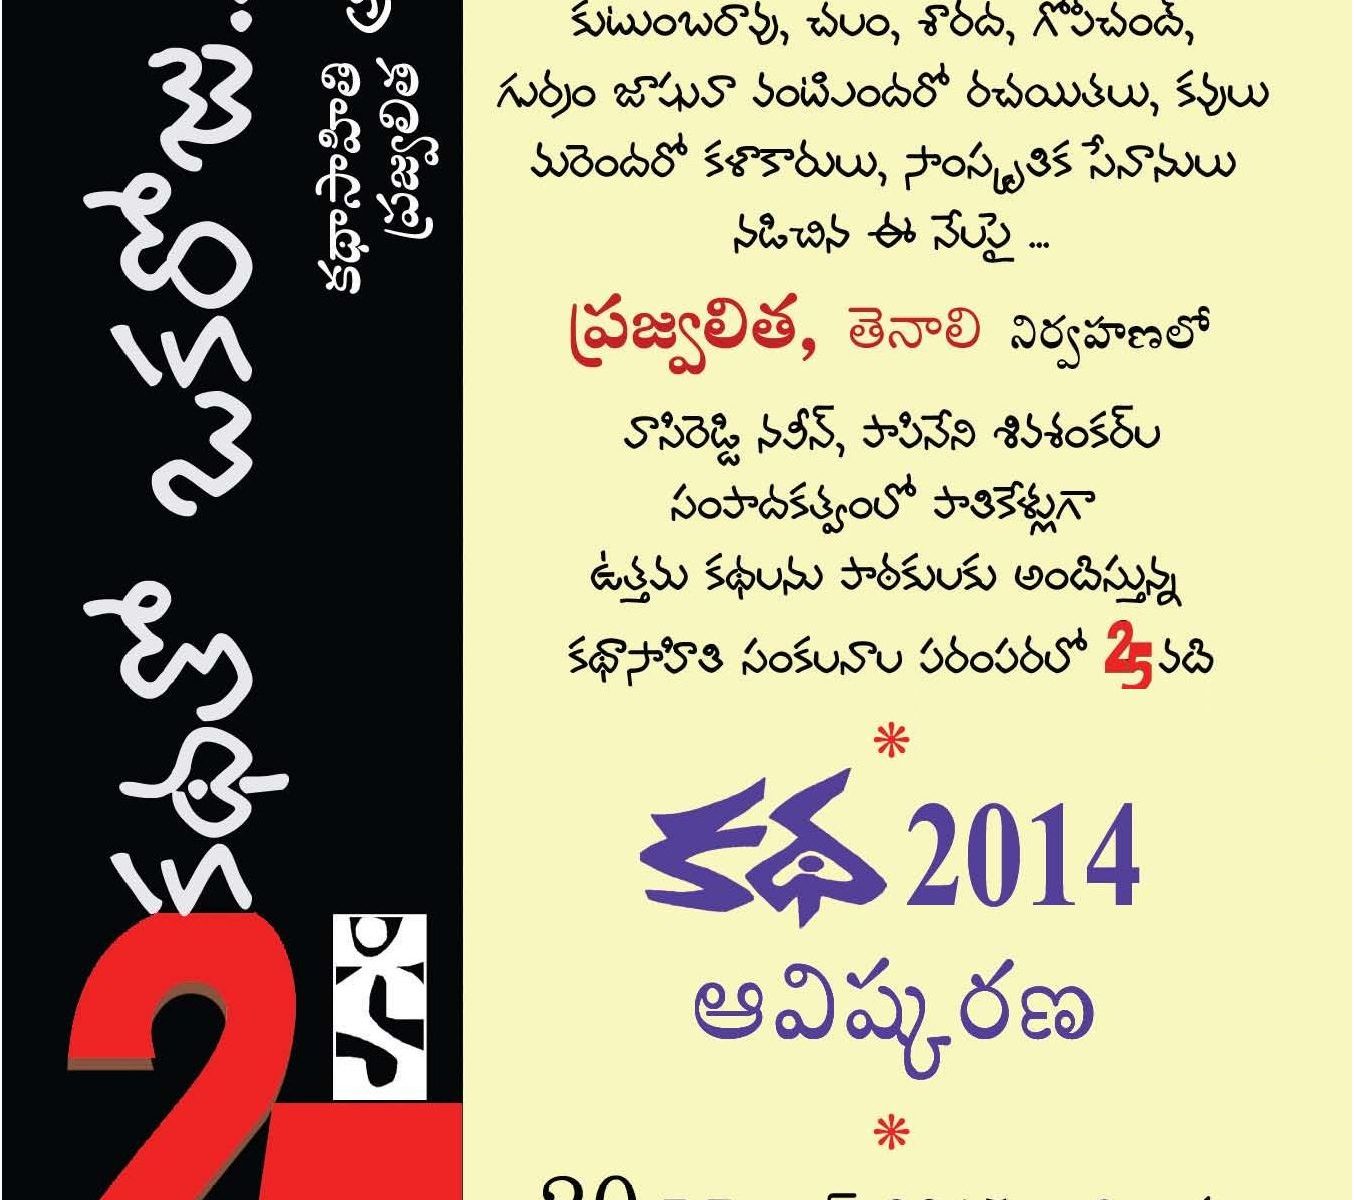 katha 2014 book launch invitation